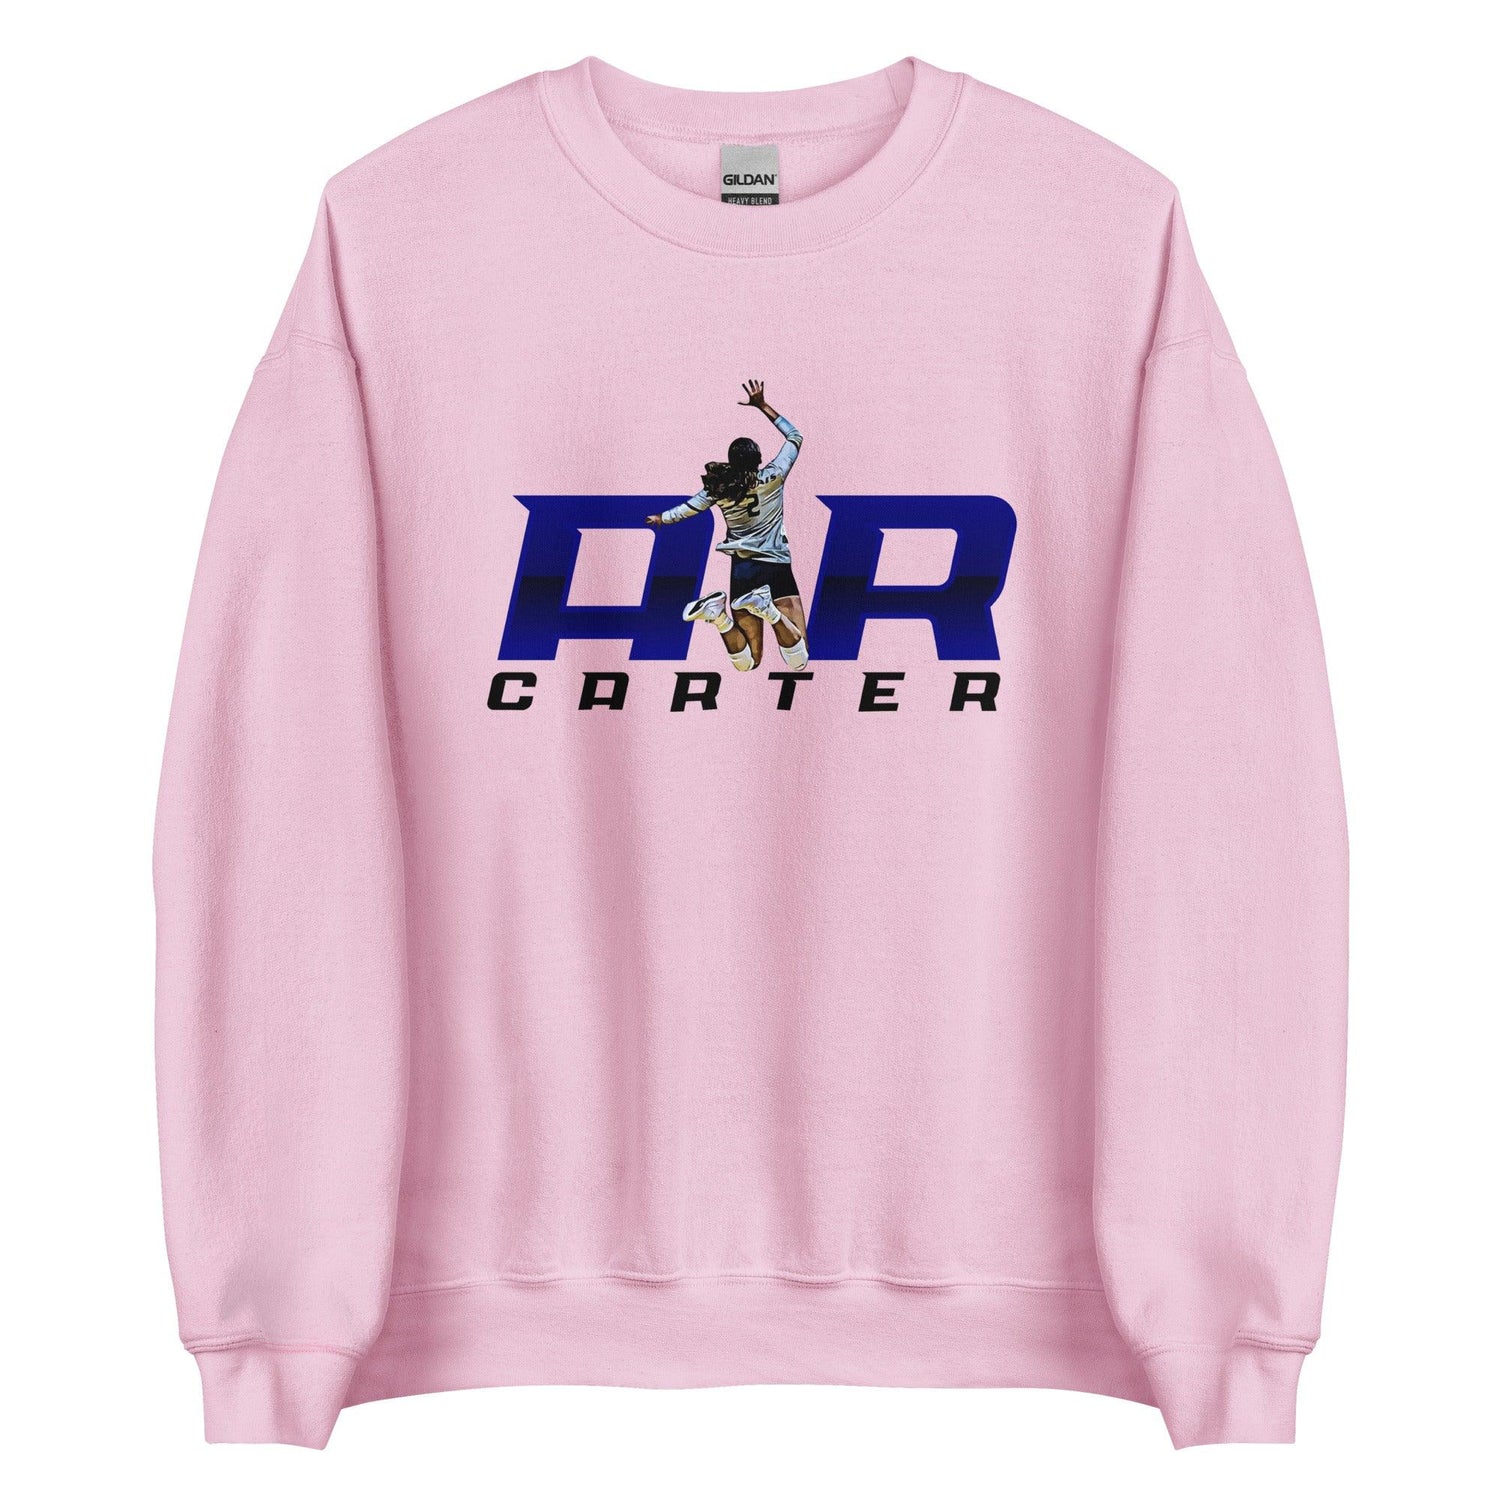 Aliyah Carter "Air" Sweatshirt - Fan Arch